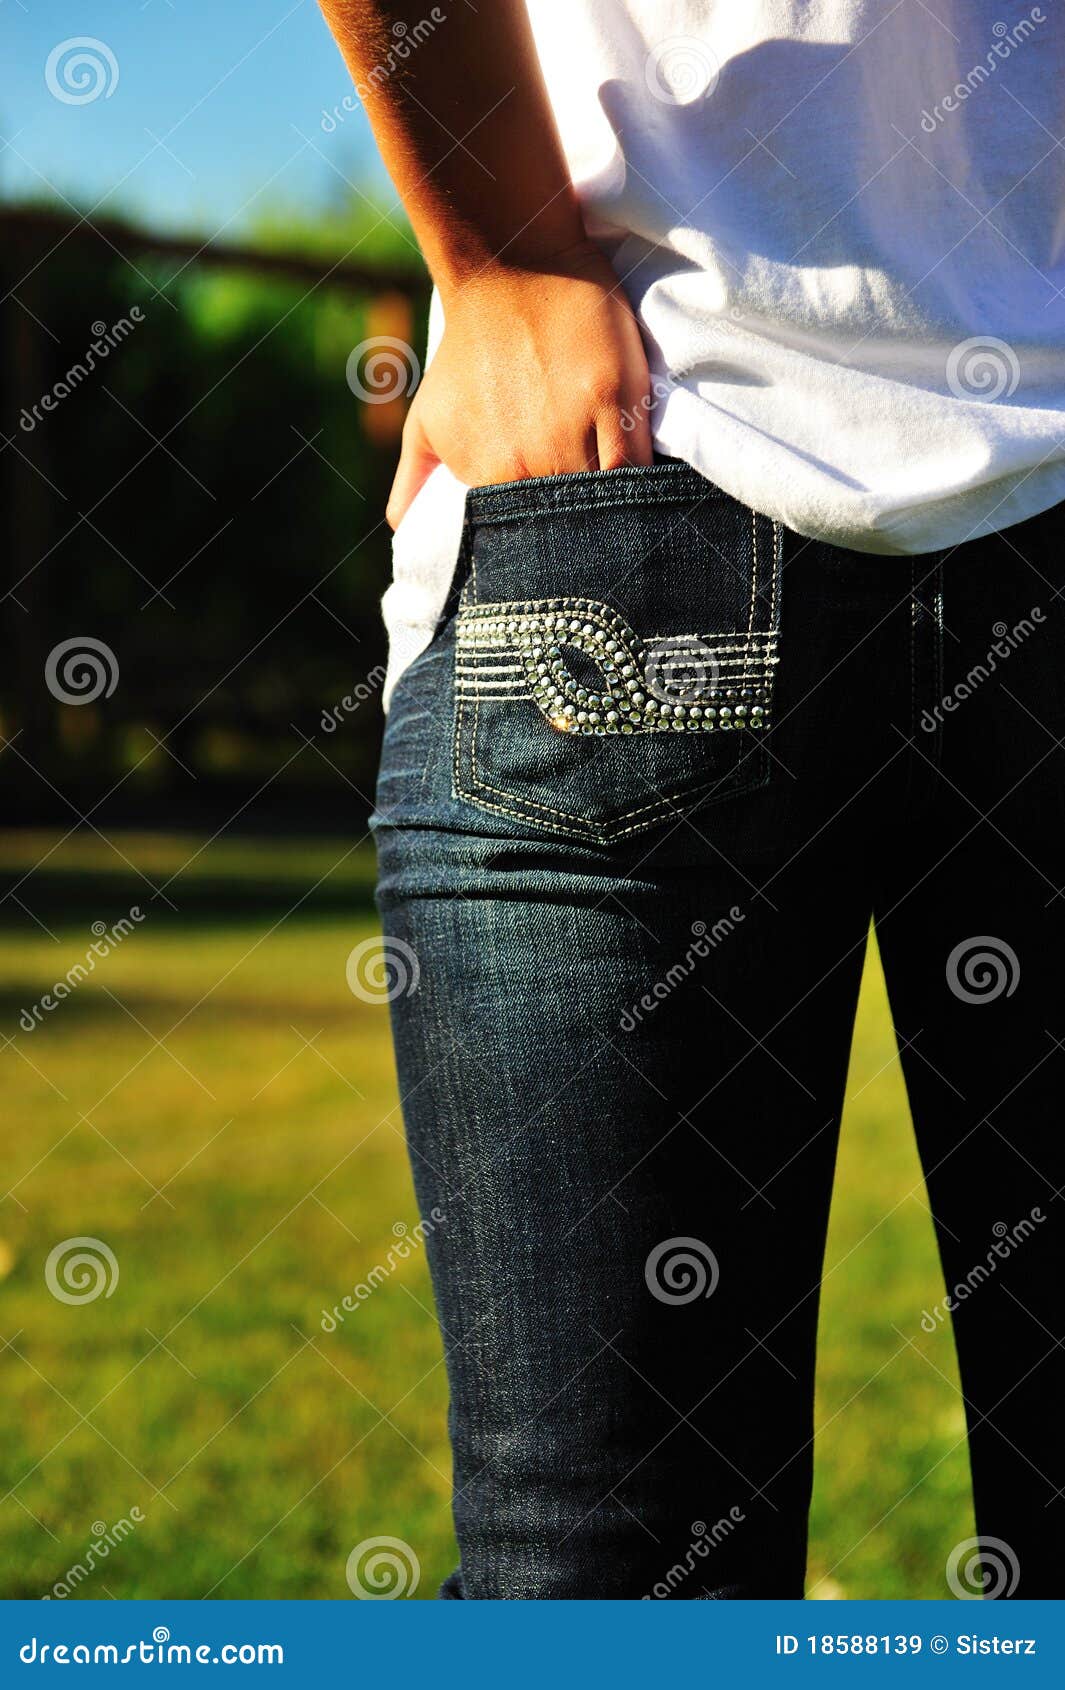 Back Pocket stock image. Image of girl, pockets, garden - 18588139